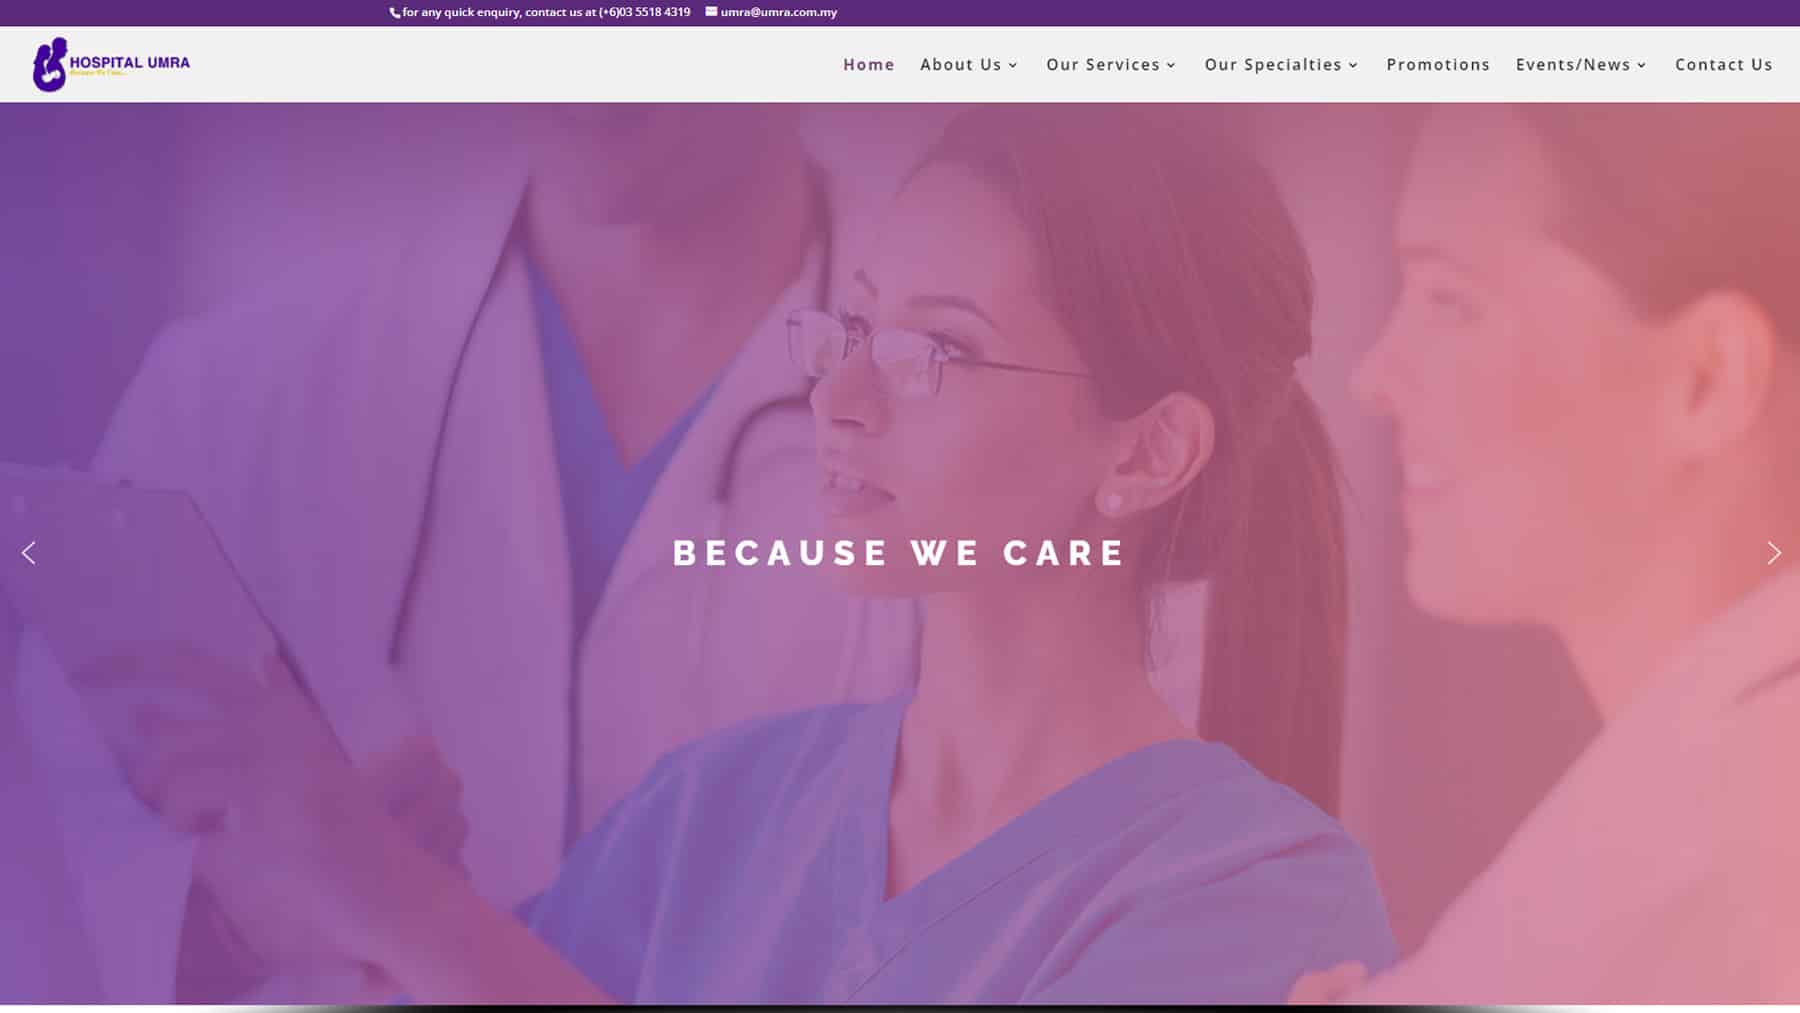 Website Design Idea For Clinics and Hospital